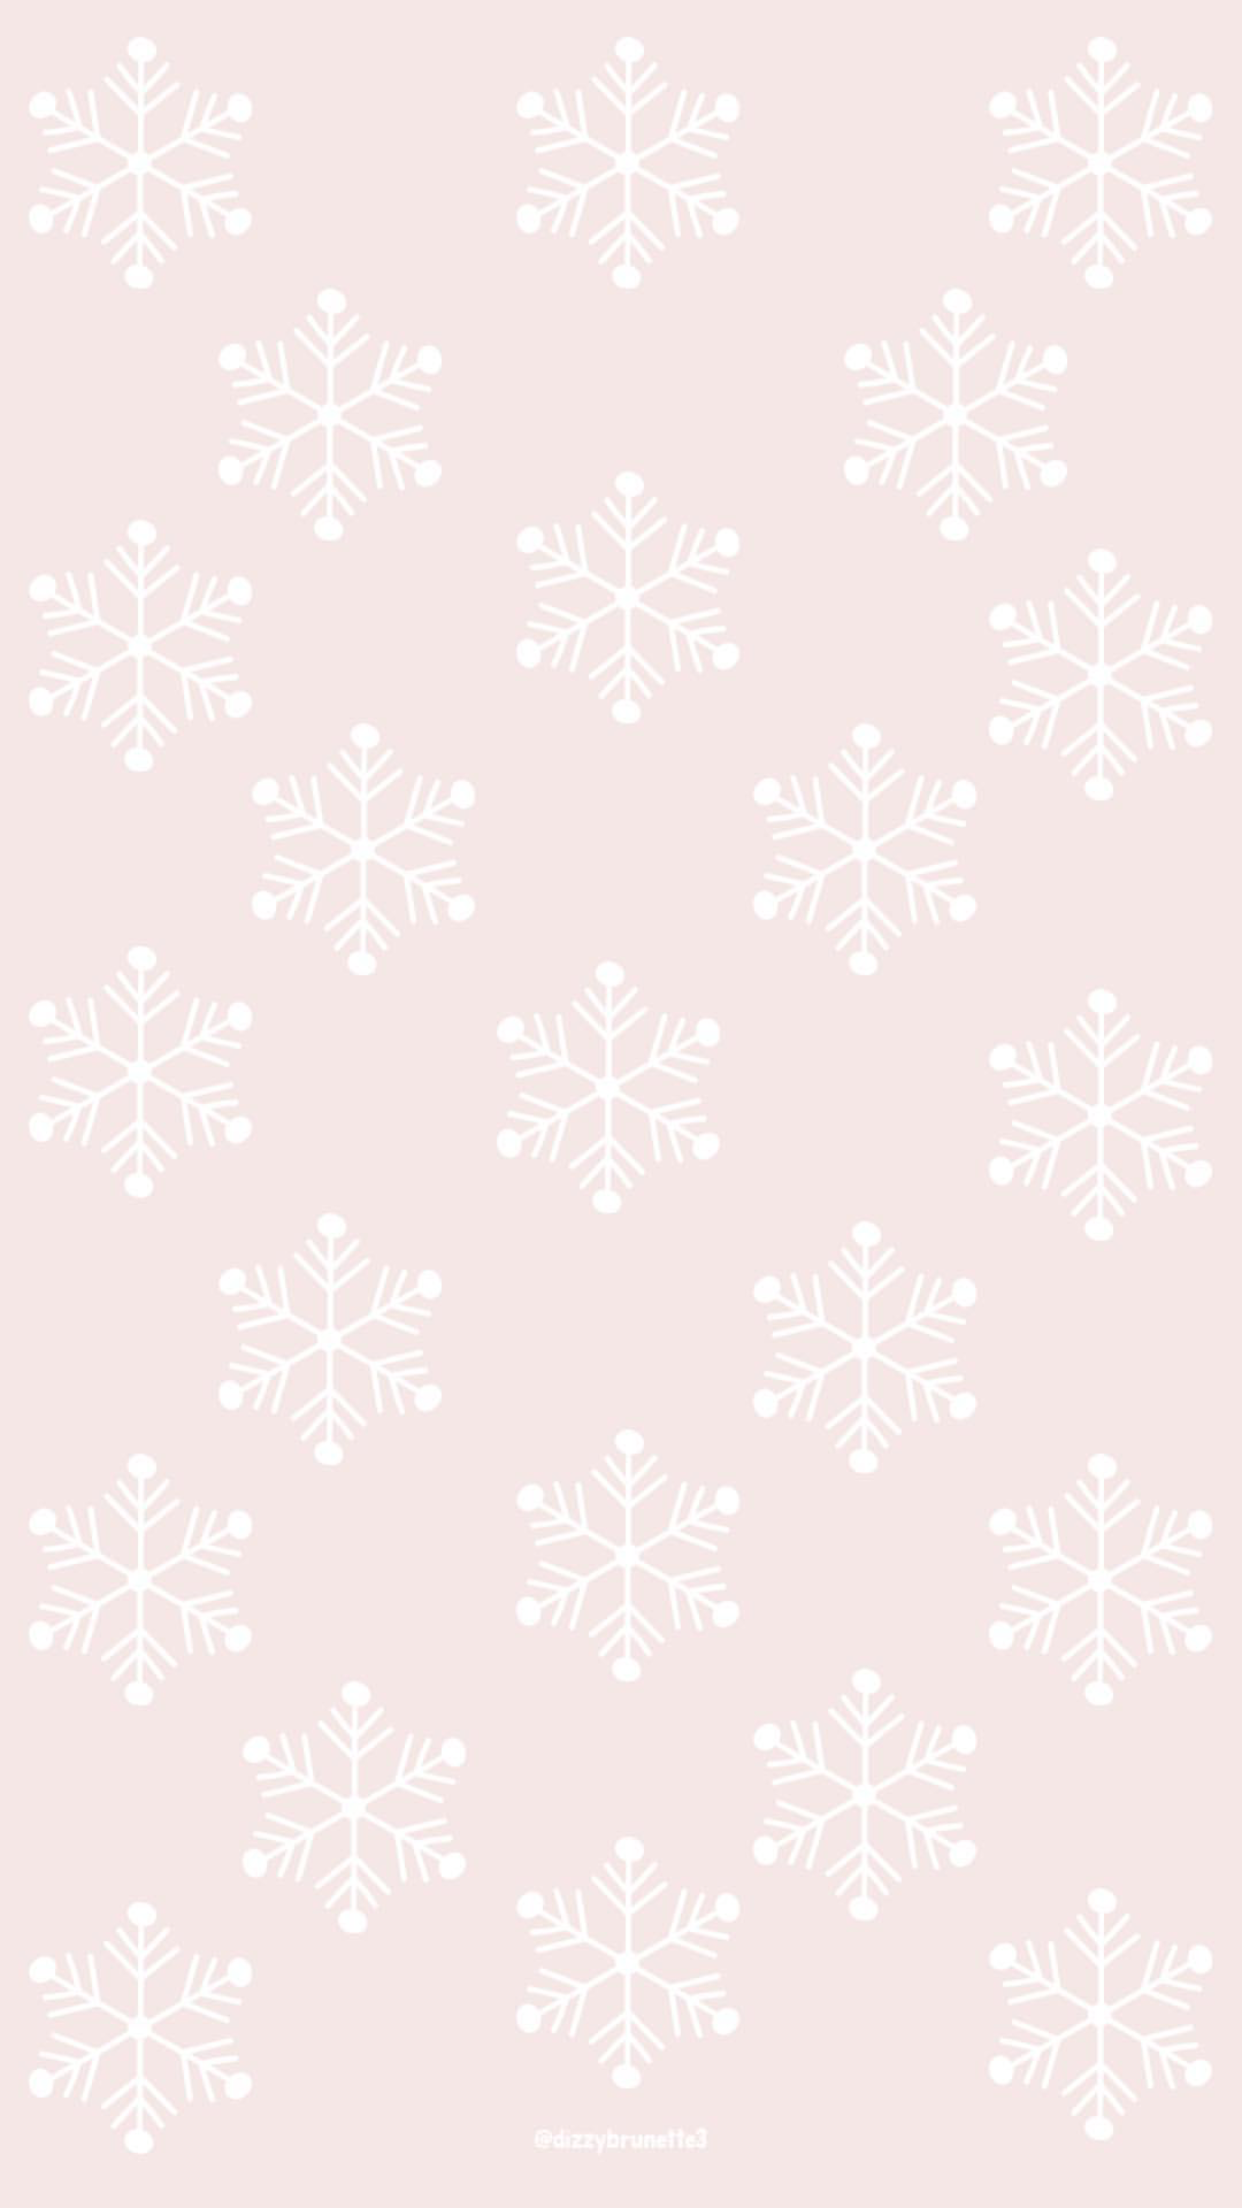 pattern #snowflakes #winter. Wallpaper iphone christmas, Christmas phone wallpaper, Christmas wallpaper